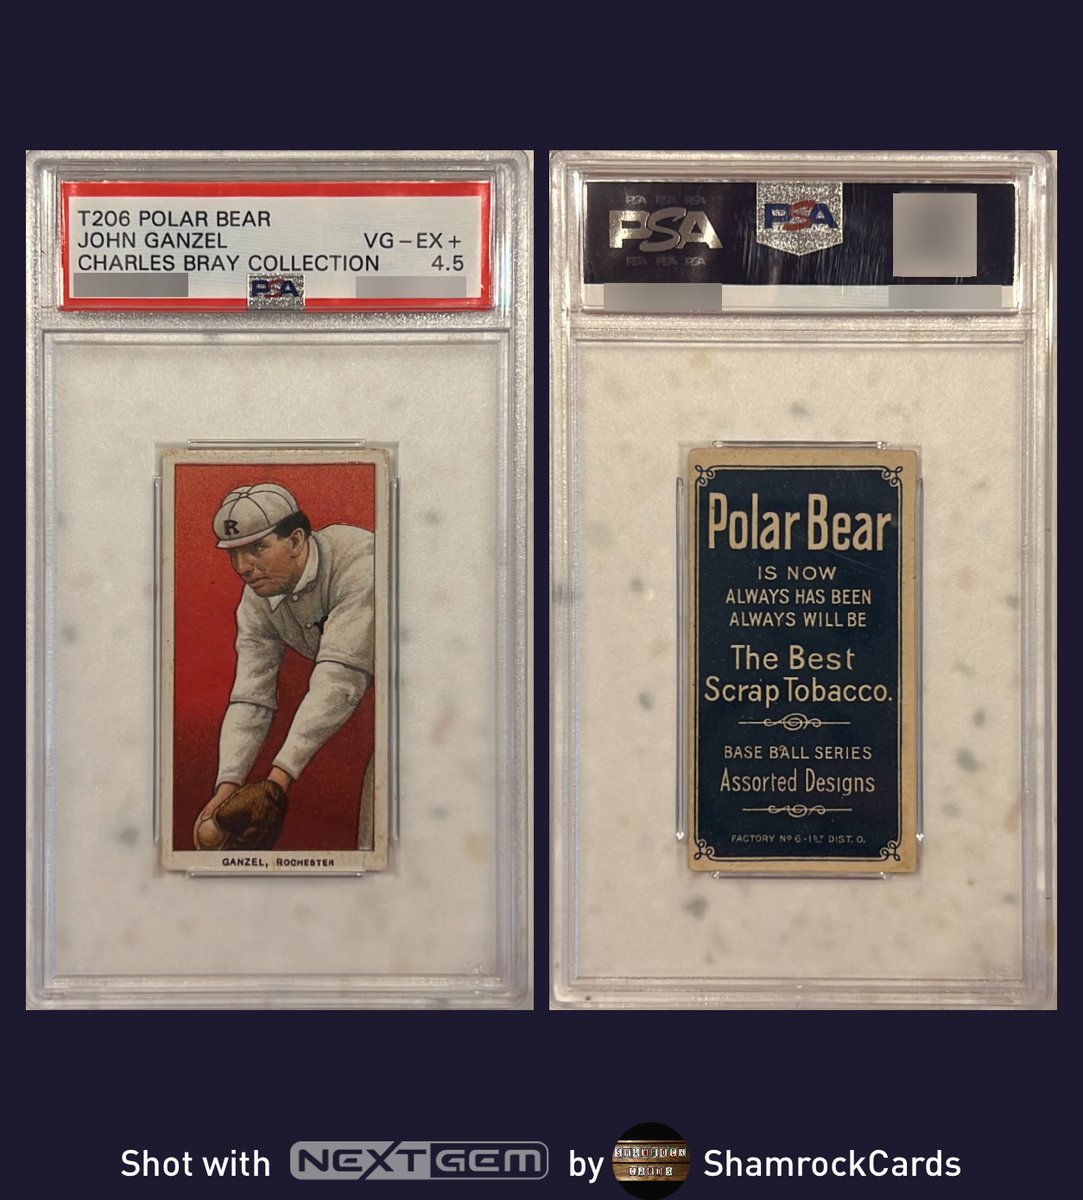 JOHN GANZEL T206 POLAR BEAR CHARLES BRAY COLLECTION See This Card: nextgem.app.link/4RPQyL1zAtb See Entire Collection: nextgem.app.link/2YCsawlHmsb @nextgemapp #psacard #gradedcard #t206 #cards #baseballcards #topps